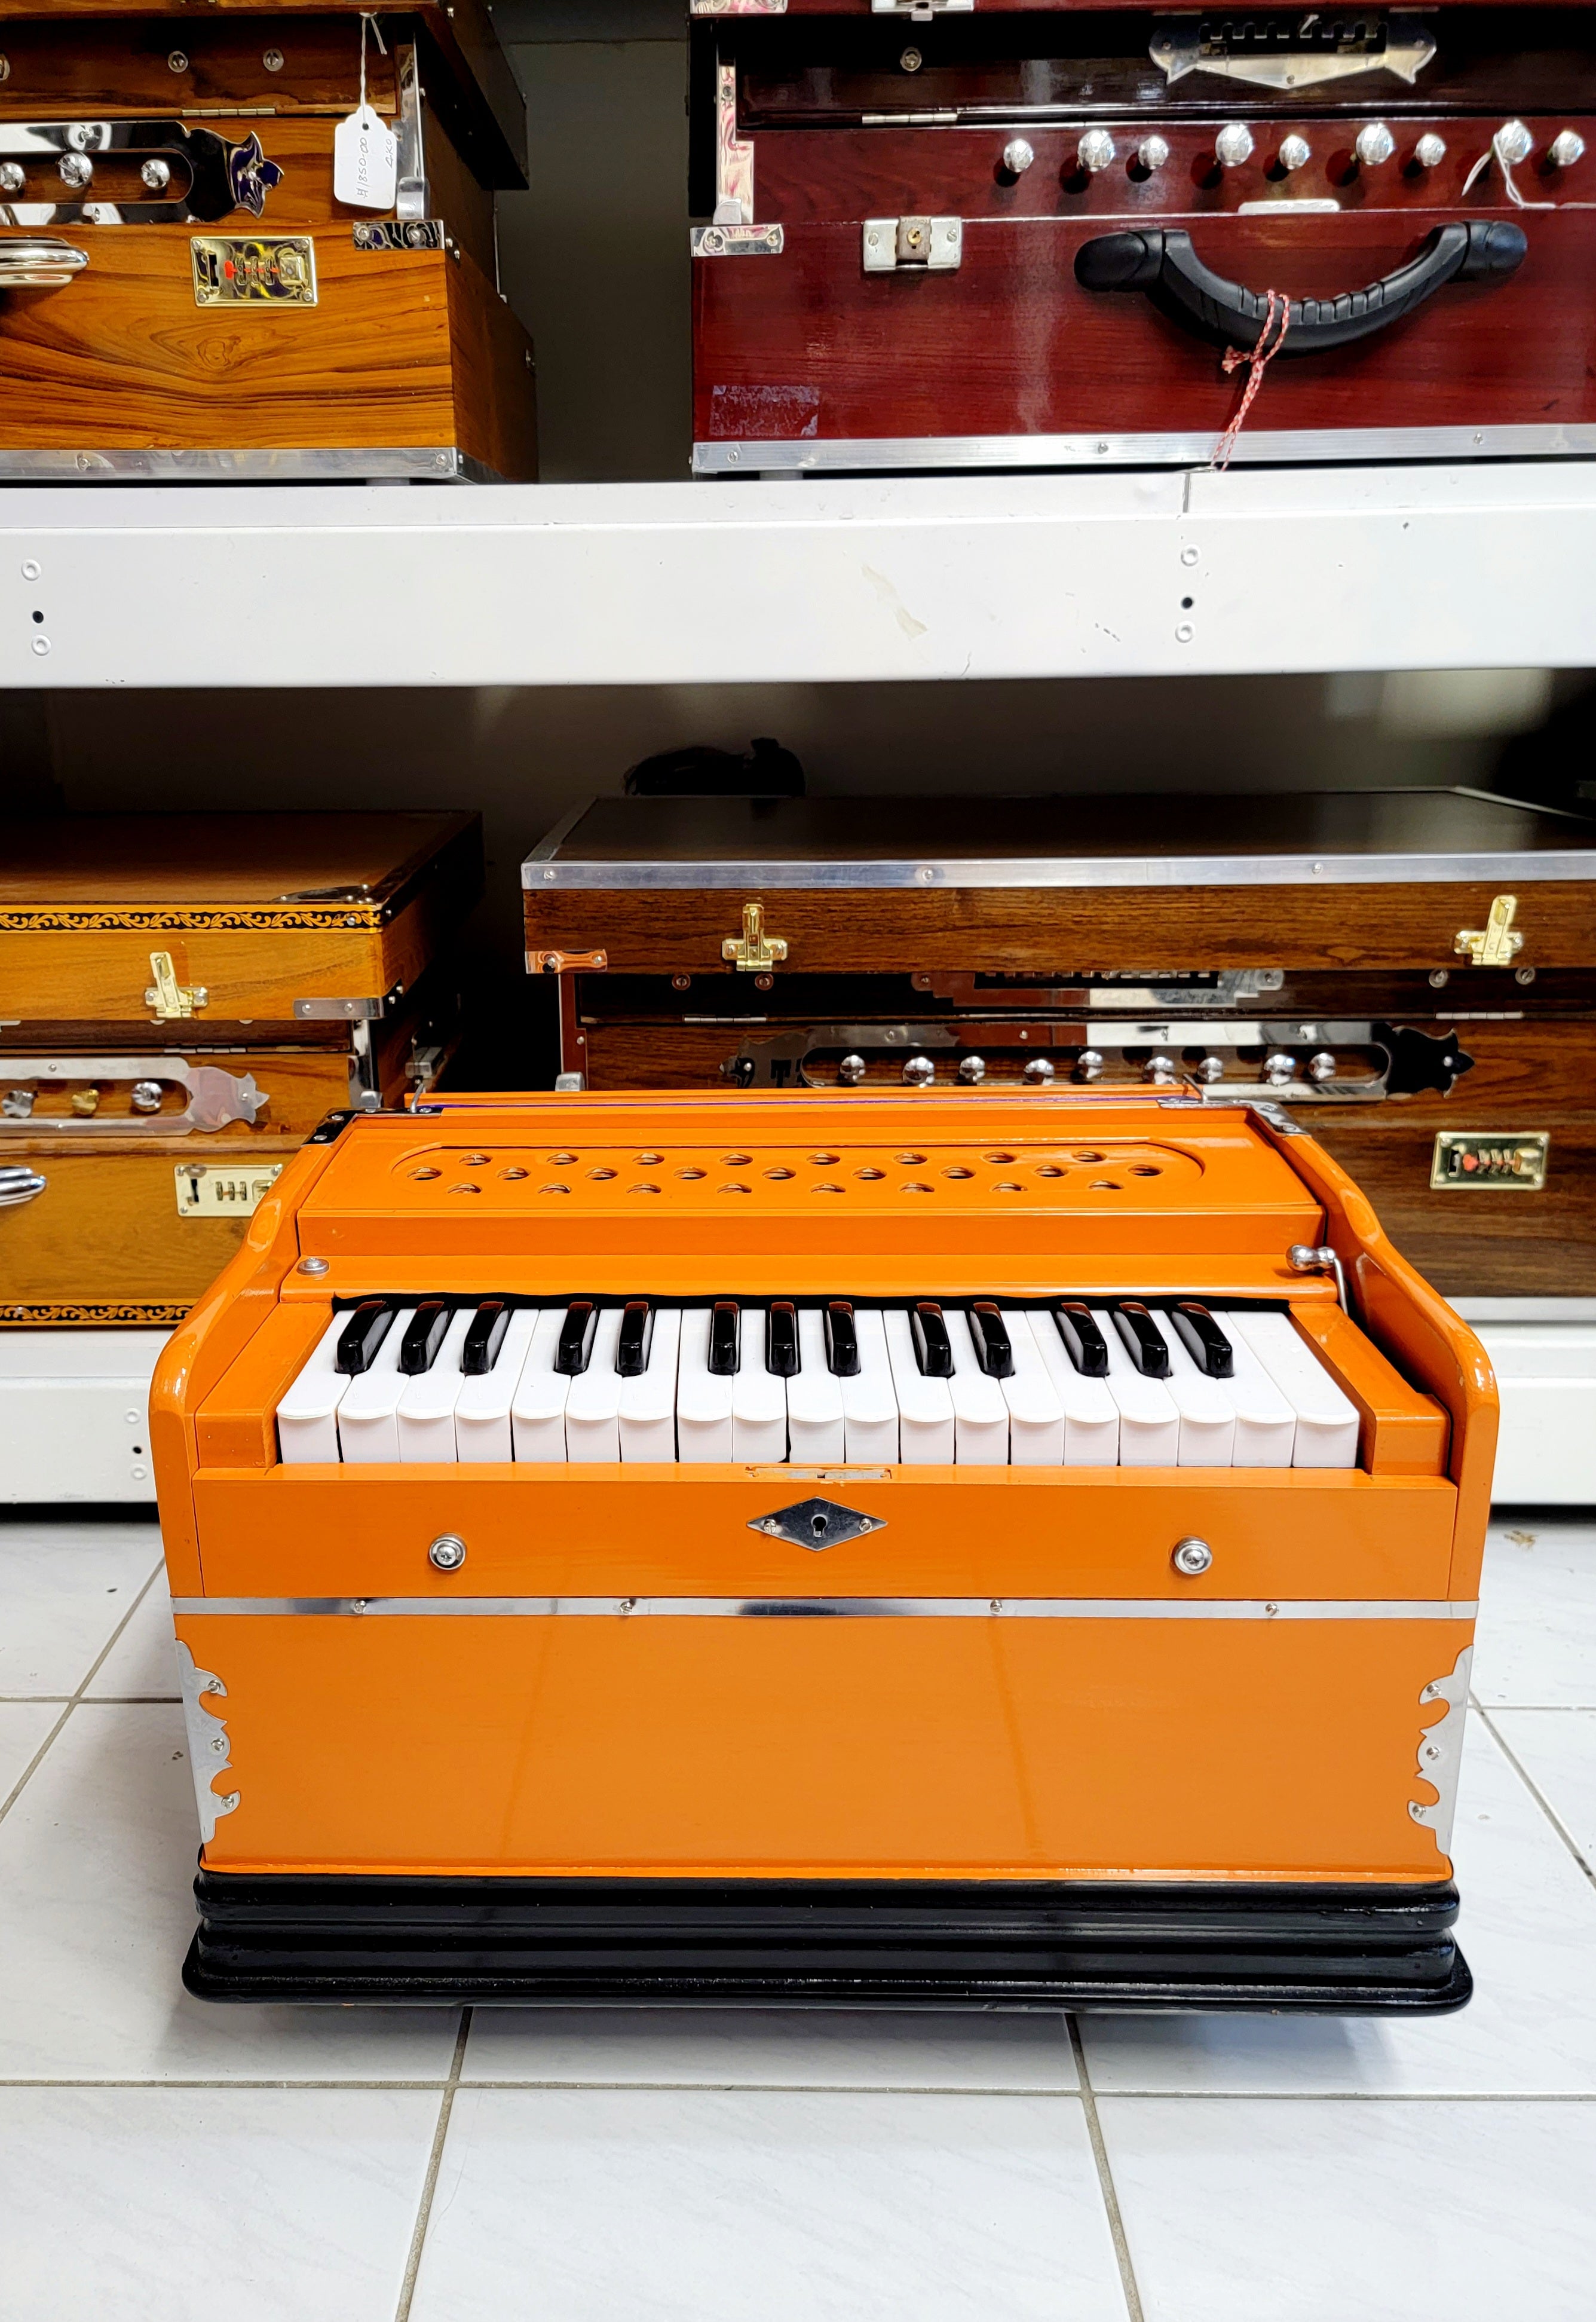 Semi-Professional Harmonium (32 Keys + Coupler) - Sangeet Store